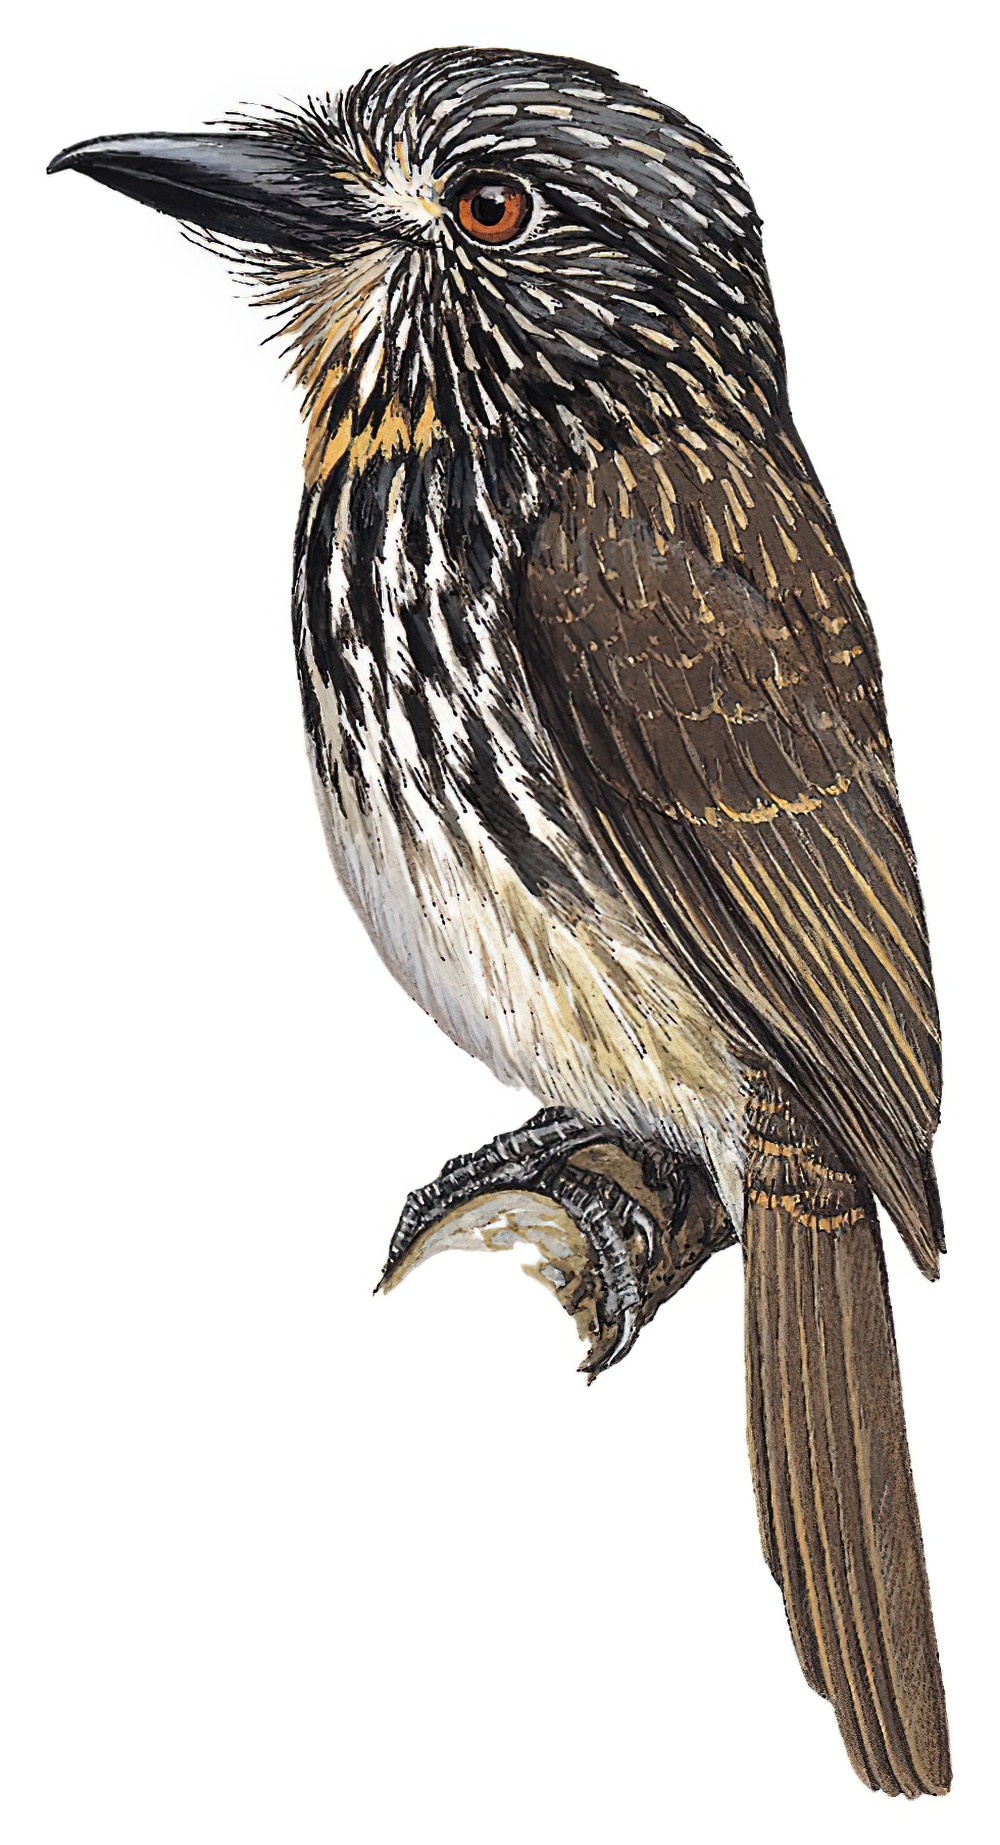 Black-streaked Puffbird / Malacoptila fulvogularis